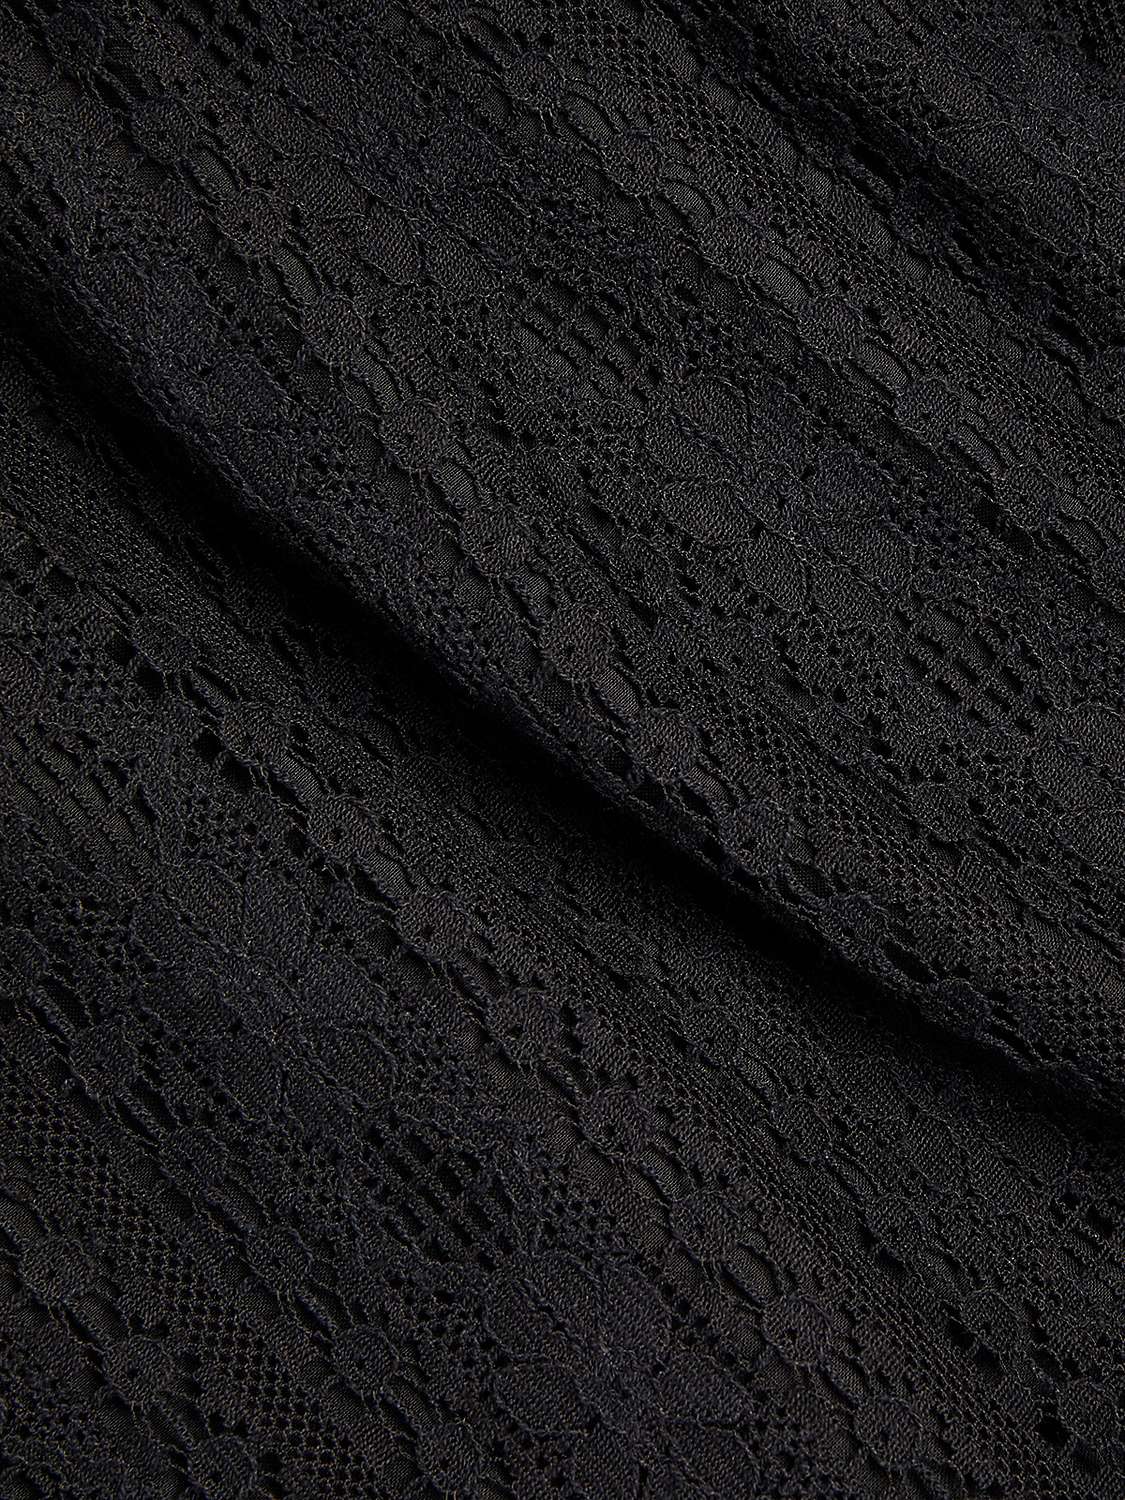 Buy Monsoon Kids' Storm Lace Cut Out Dress, Black Online at johnlewis.com